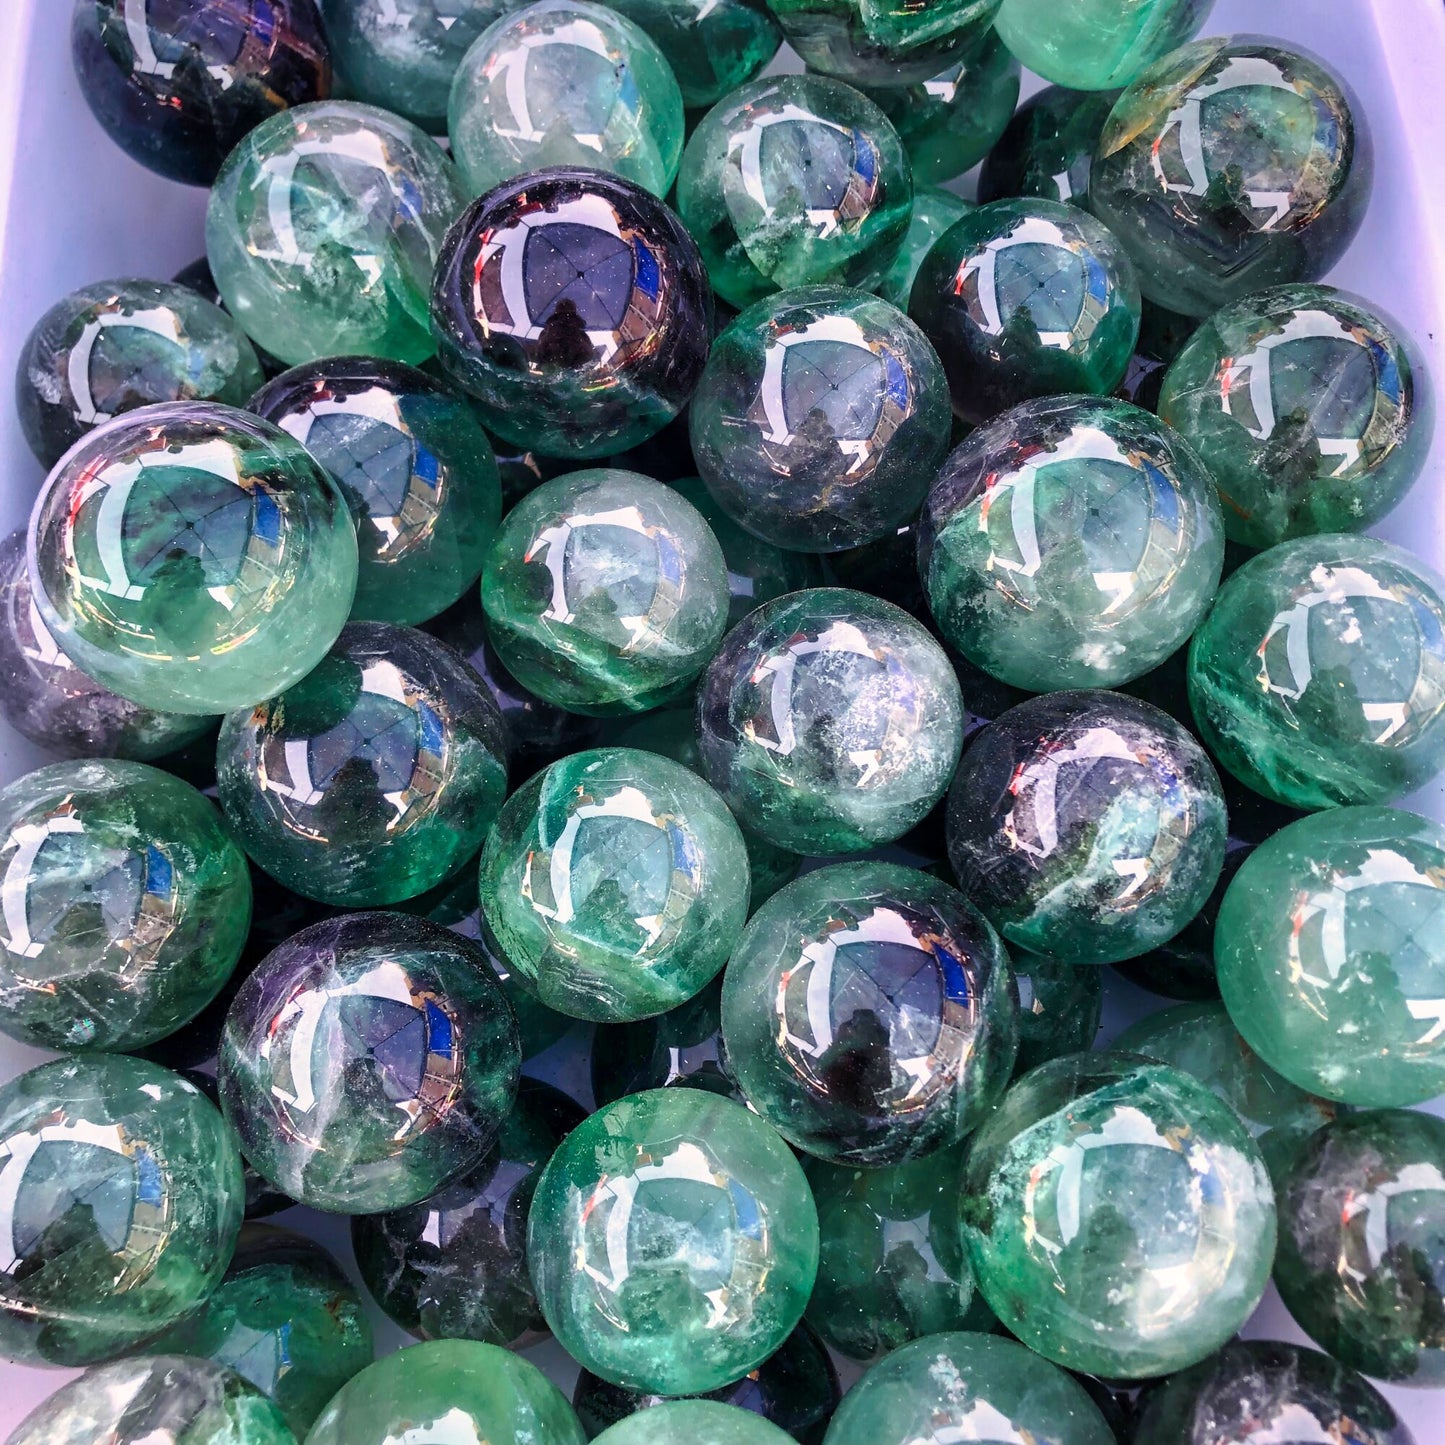 Hand-Polished Quartz Balls with Natural Fluorite for Home Decor - 5-6cm